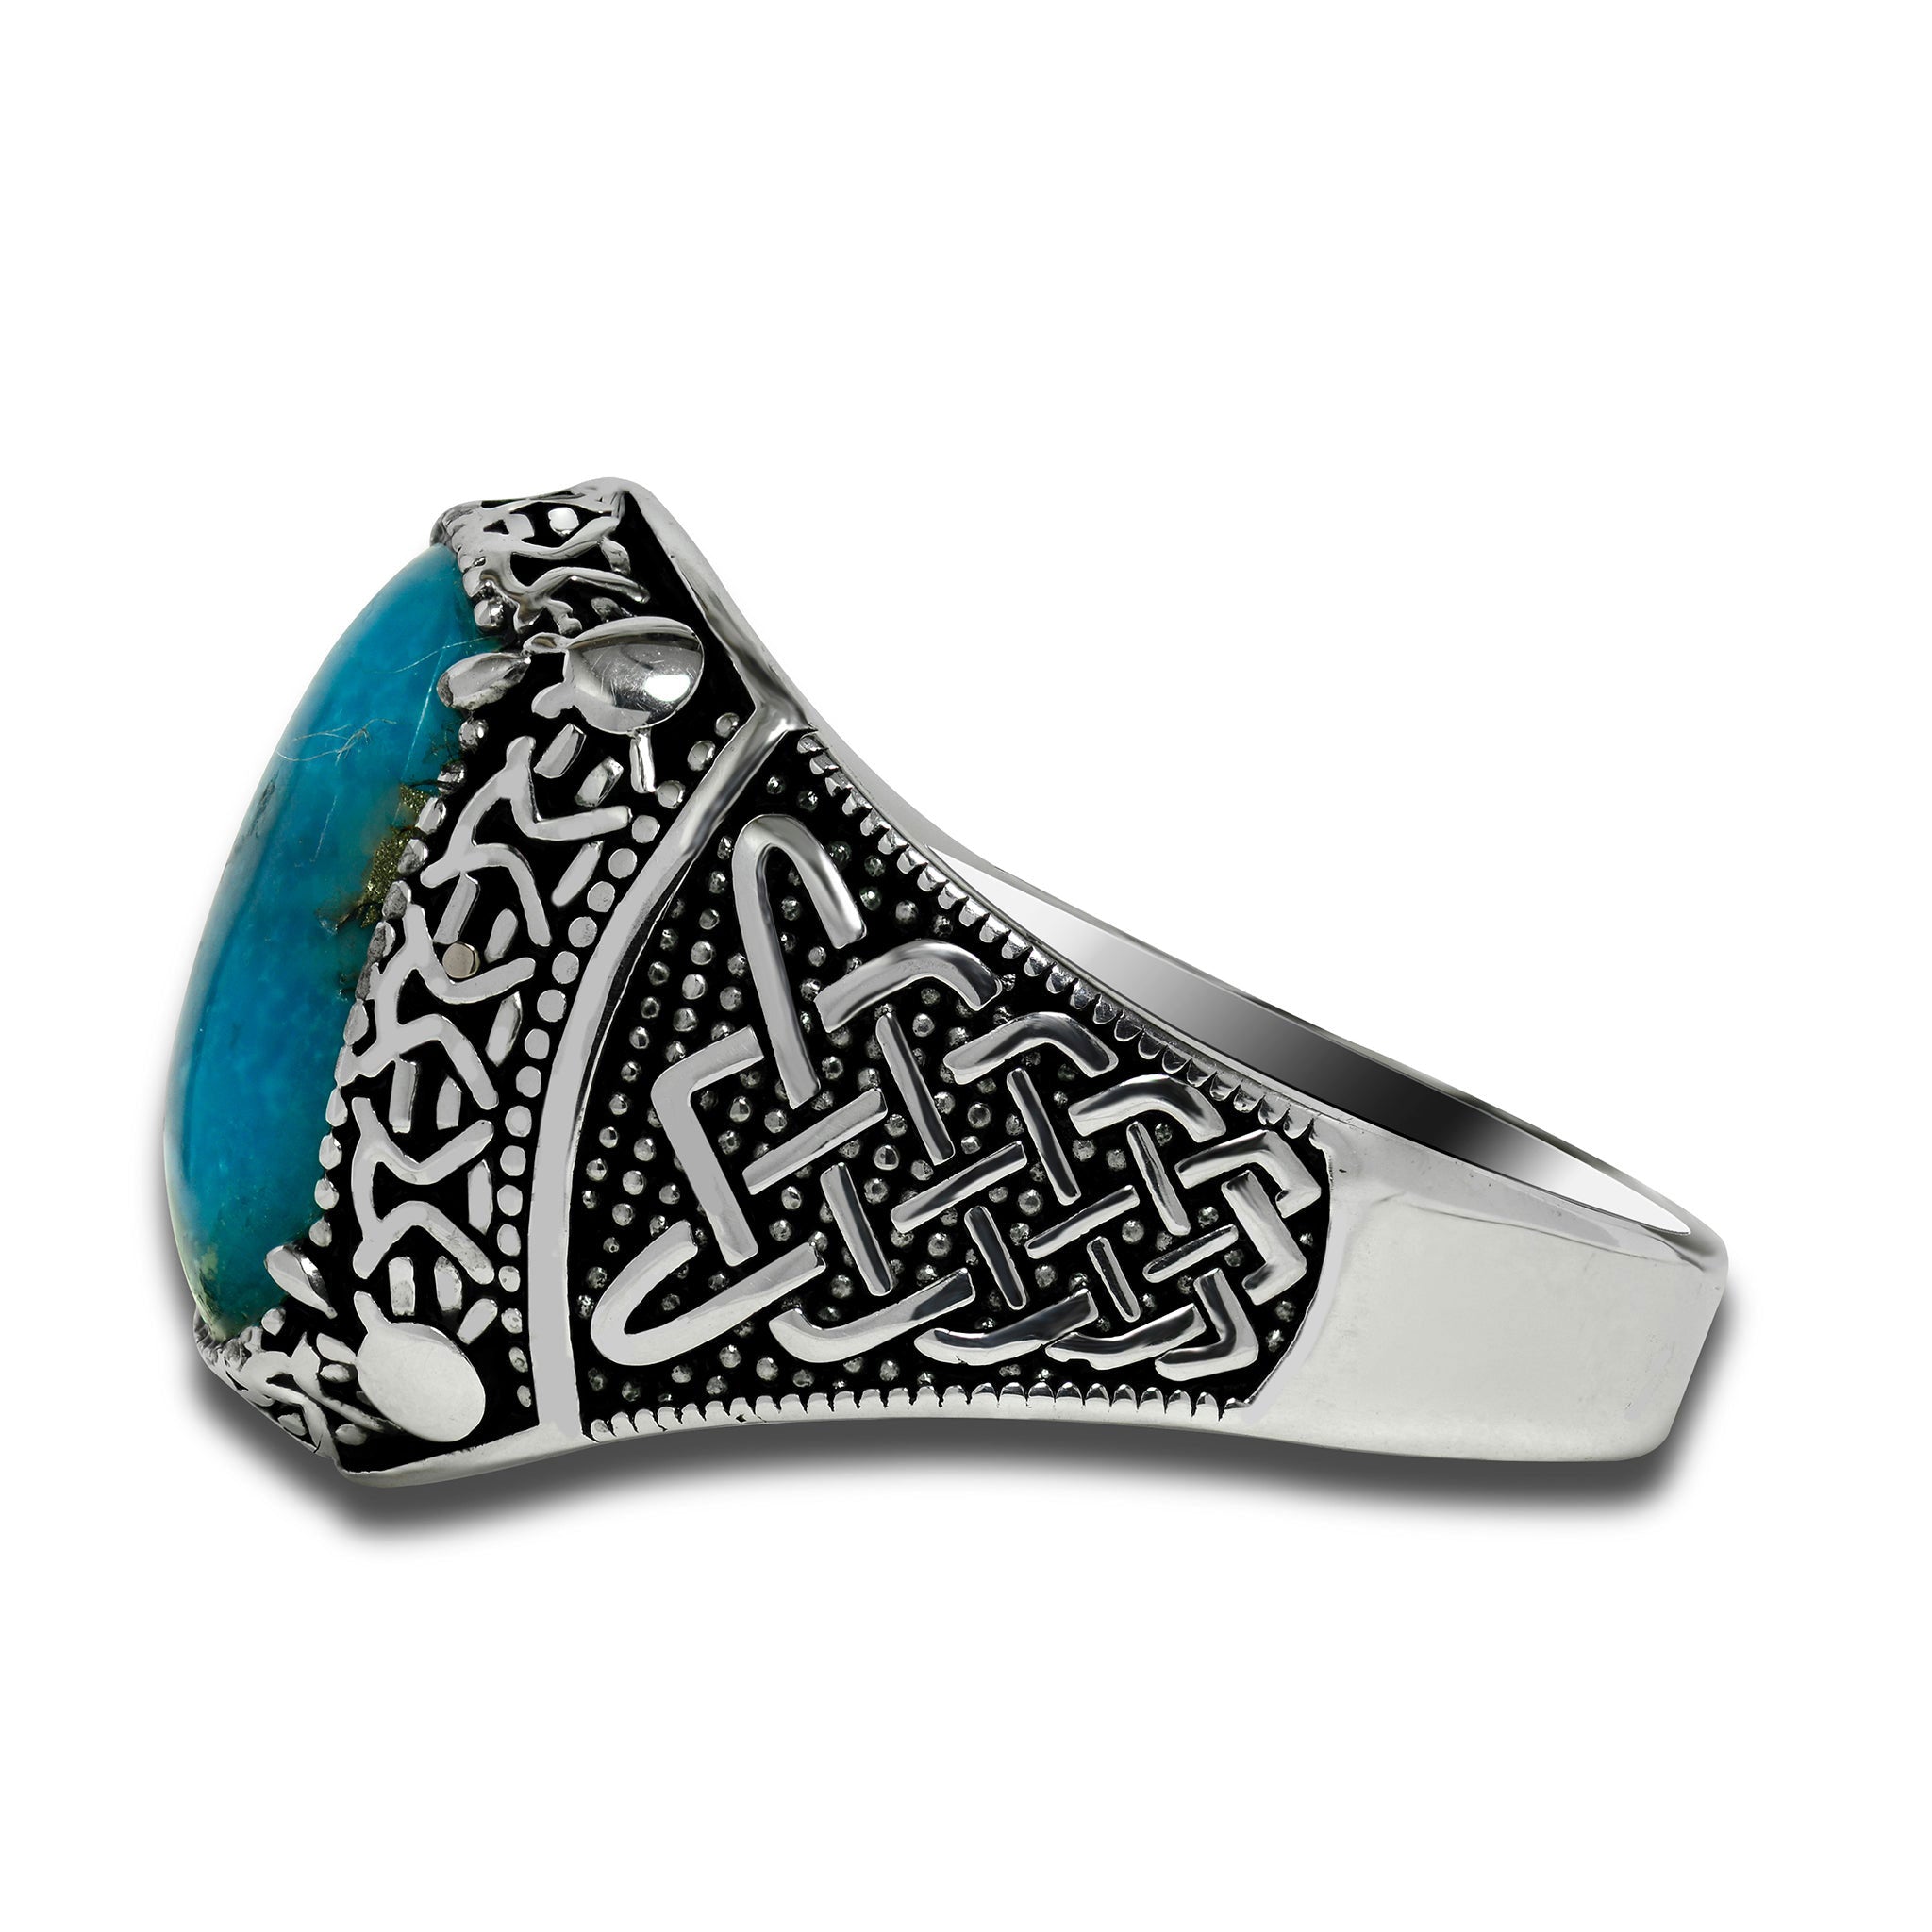 shajri feroza stone ring design for man | turquoise stone | Muzaffar Ali  Gemstone and jewellery fsd